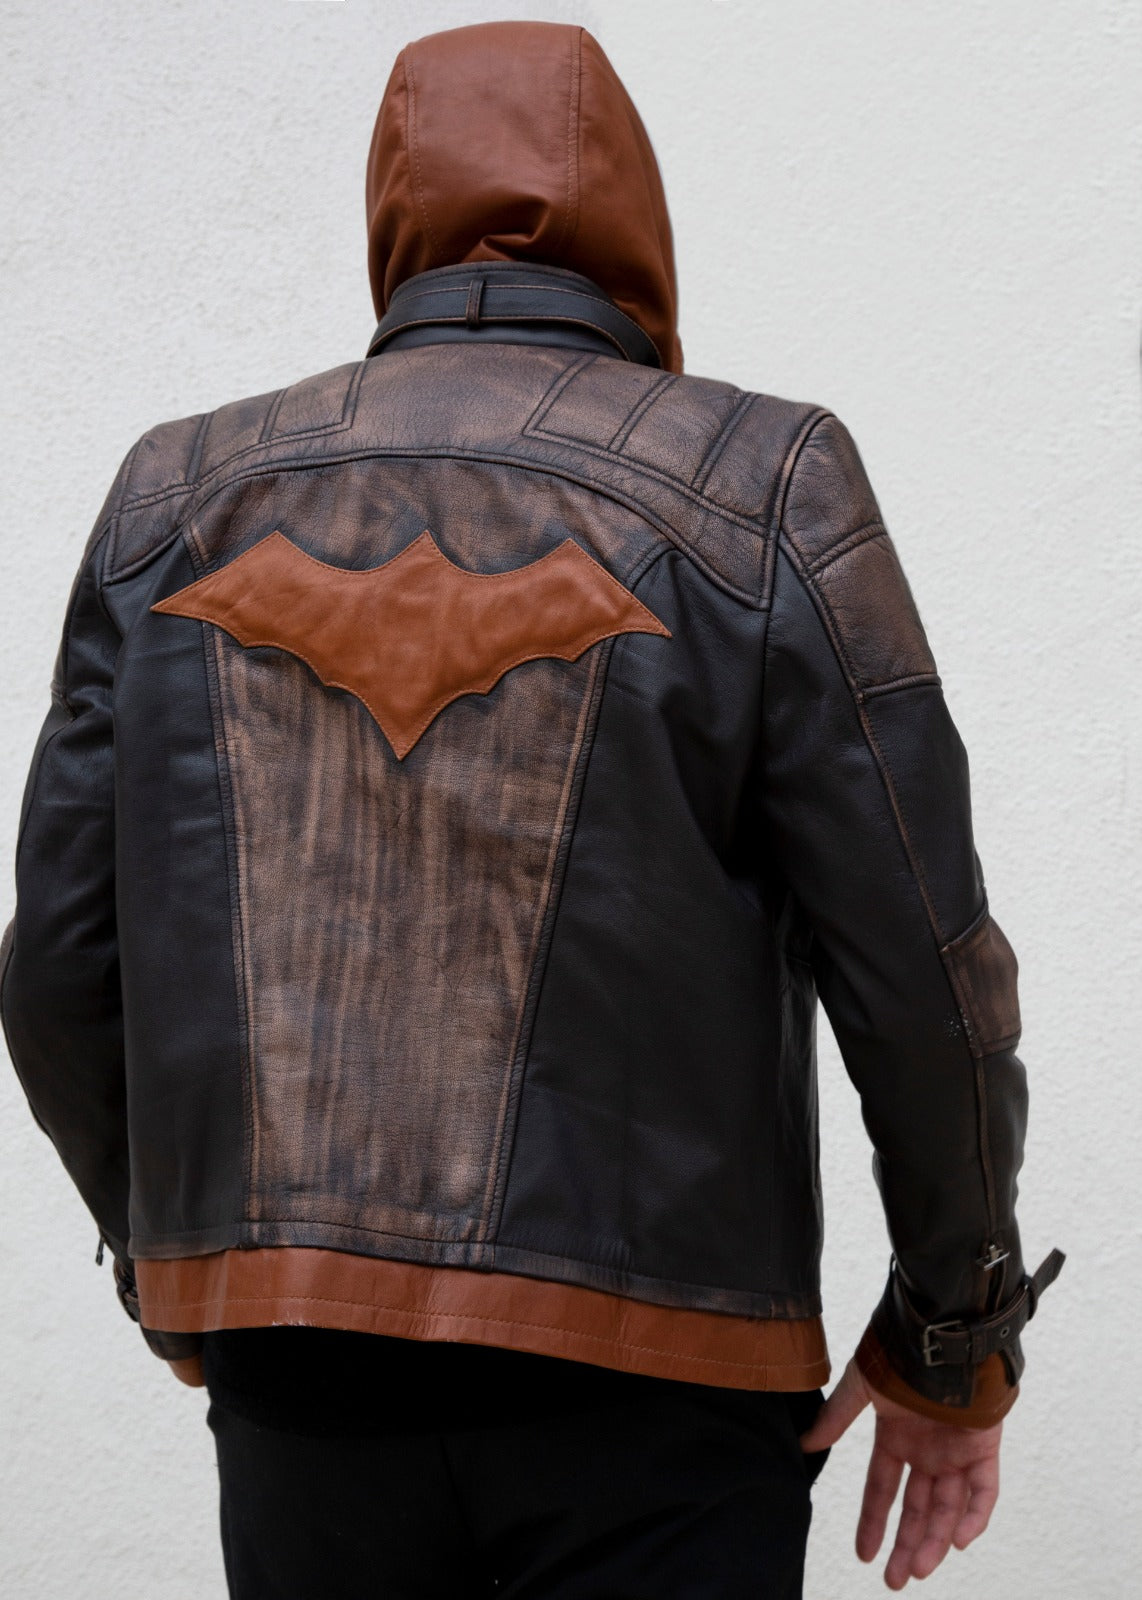 Buy Mens Arkham Knight Brown Hood Leather Jacket | LucaJackets – Luca ...